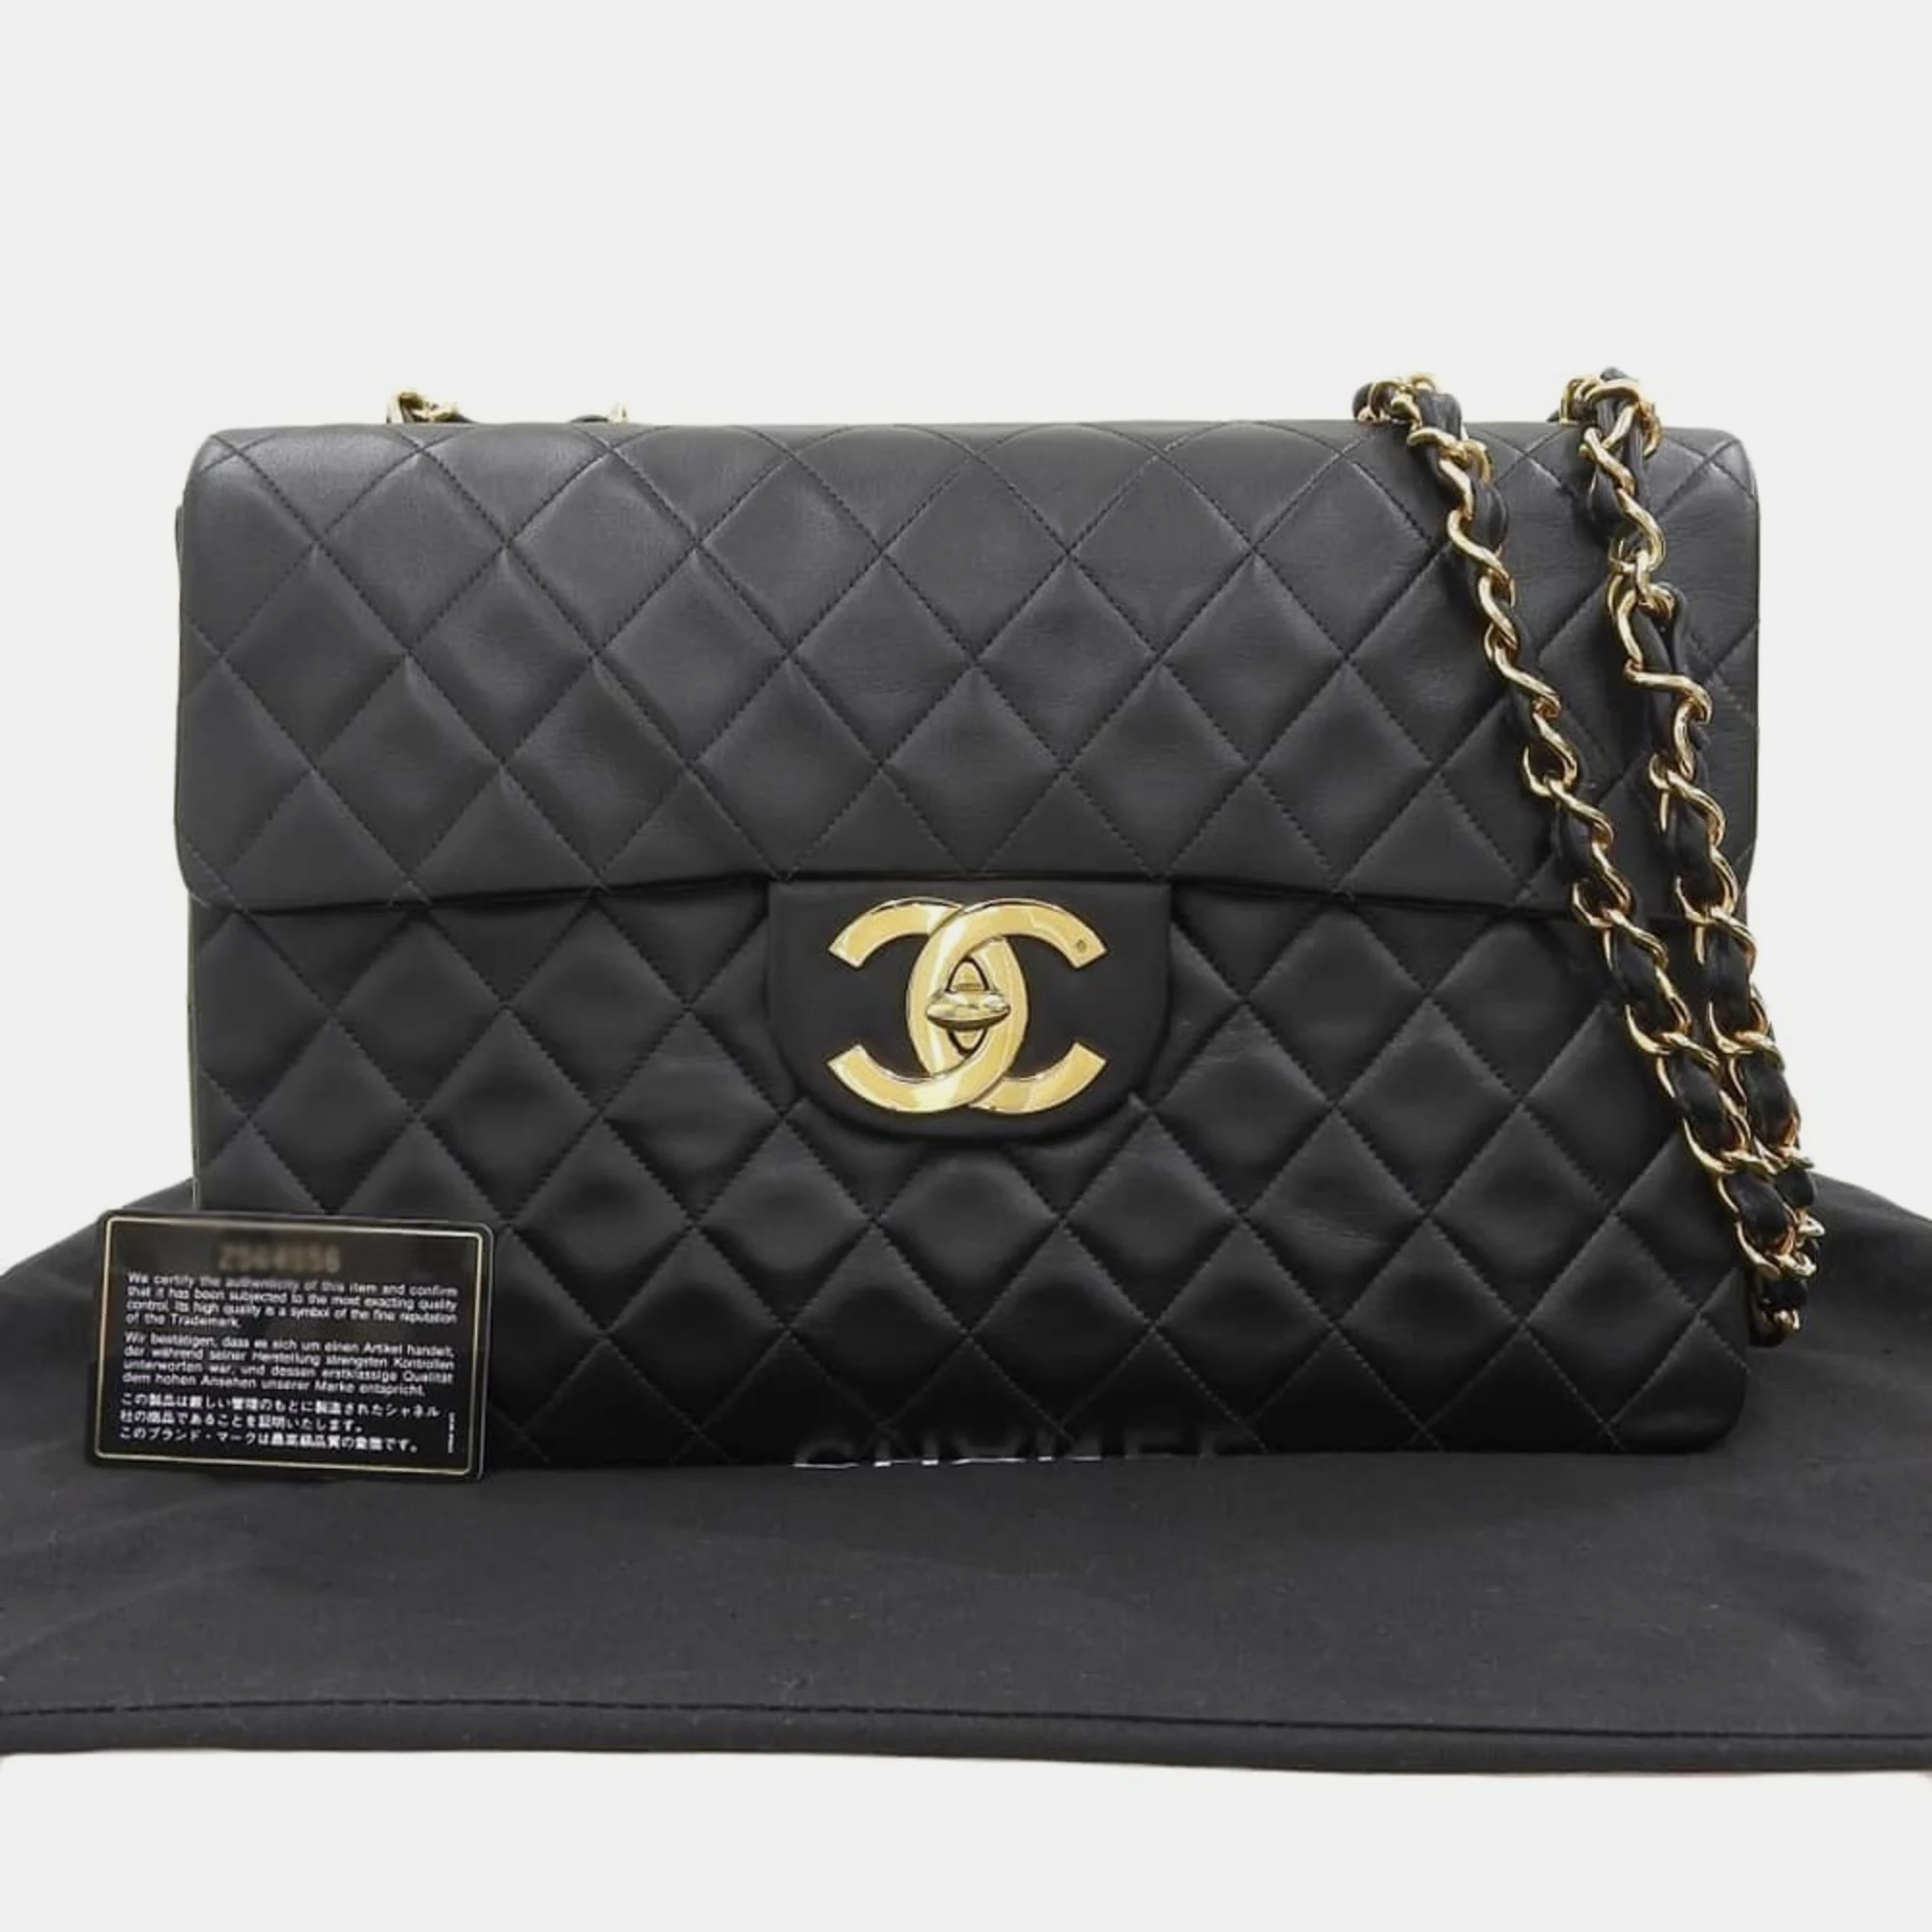 Chanel black jumbo xl classic single flap bag